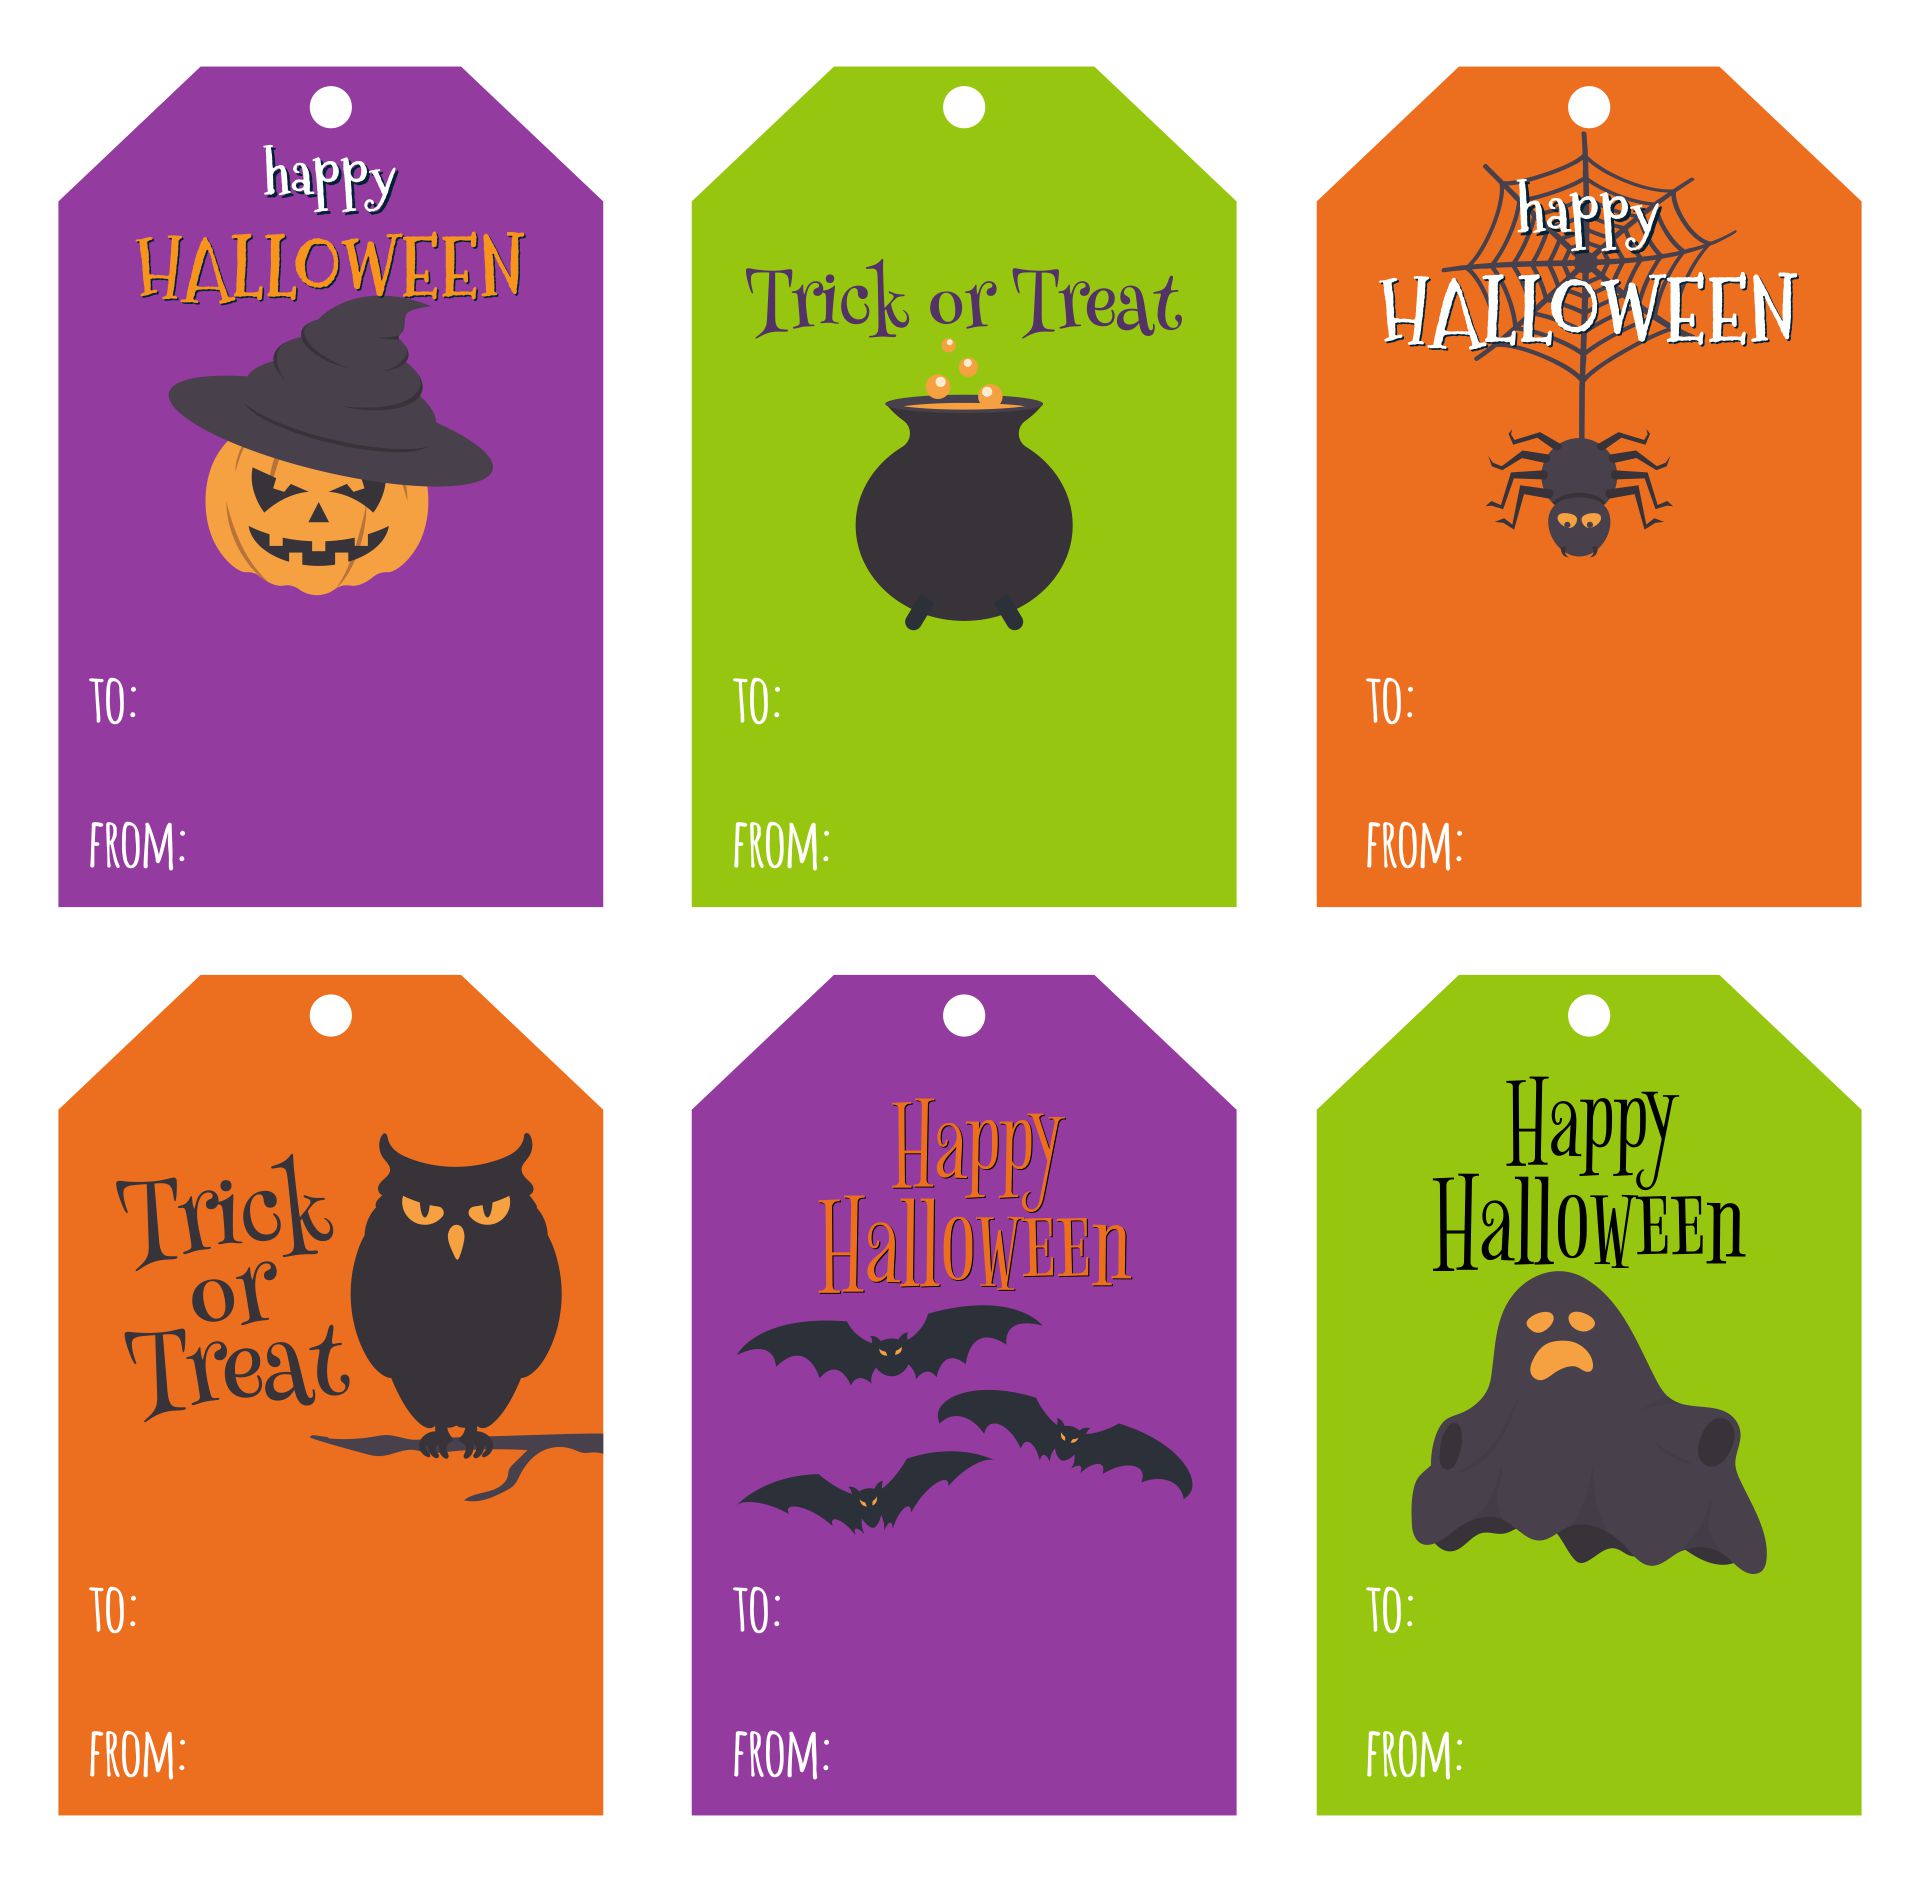 8 Best Images of Halloween Bag Printables Free Printable Halloween